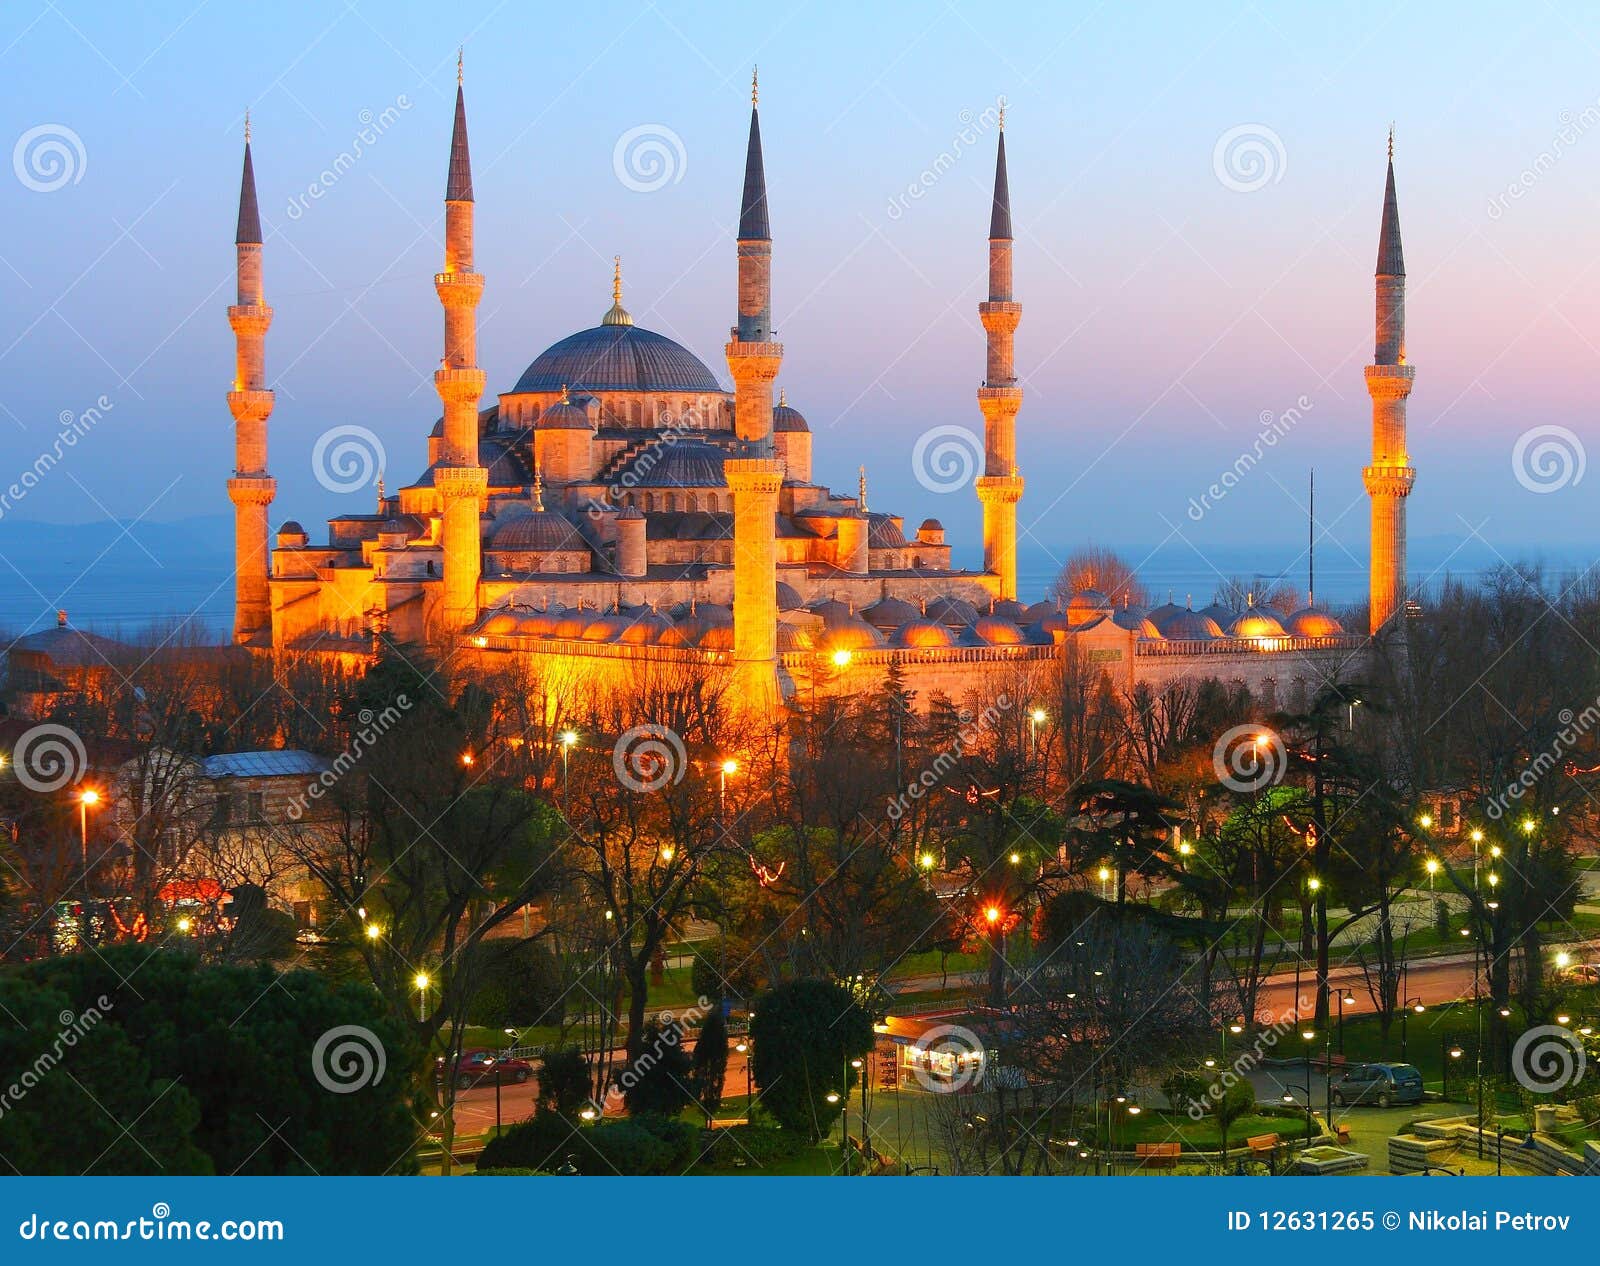 sultan ahmet blue mosque dusk